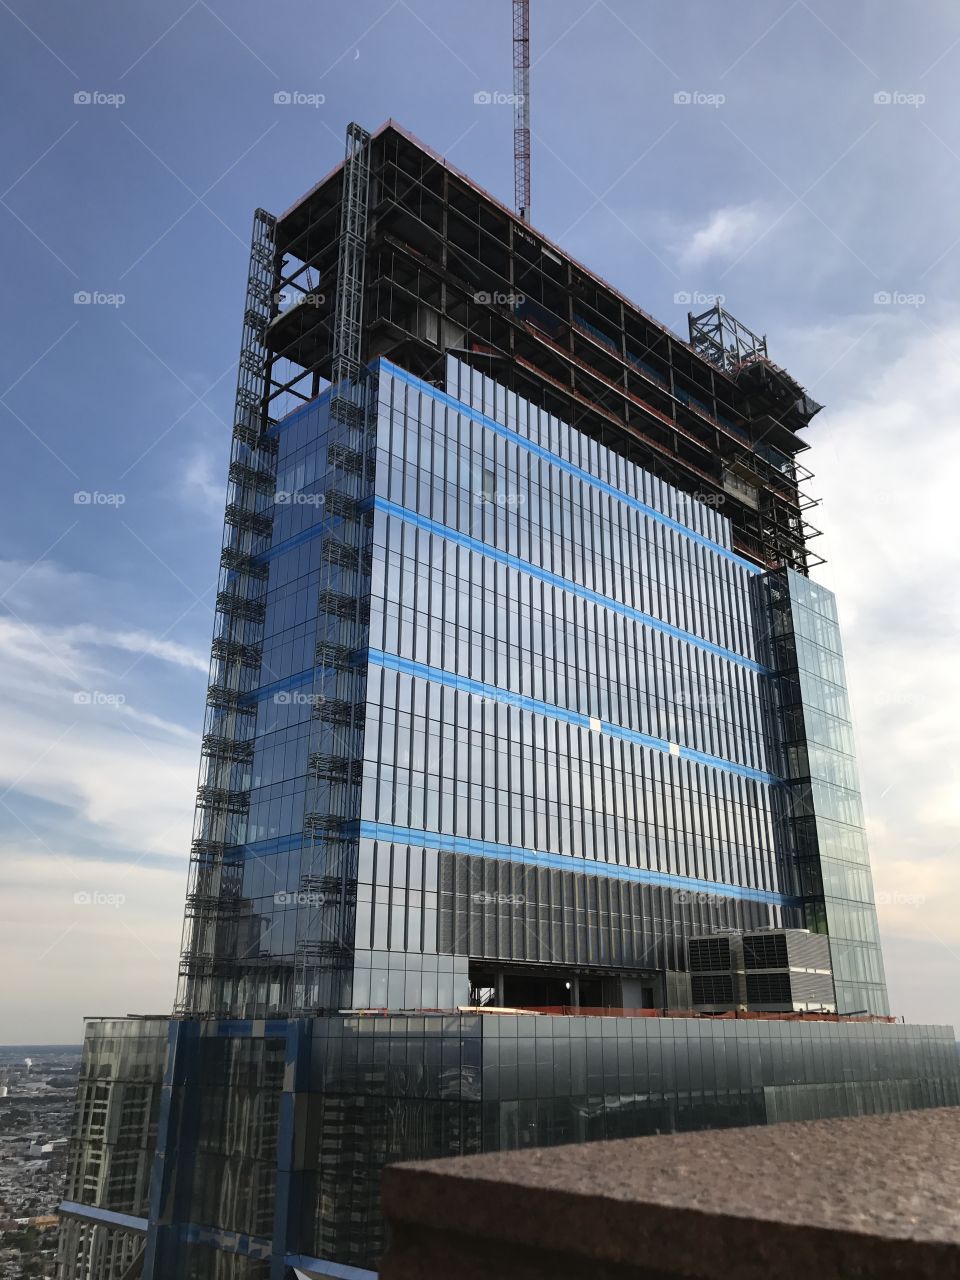 Skyscraper under construction in Philadelphia 